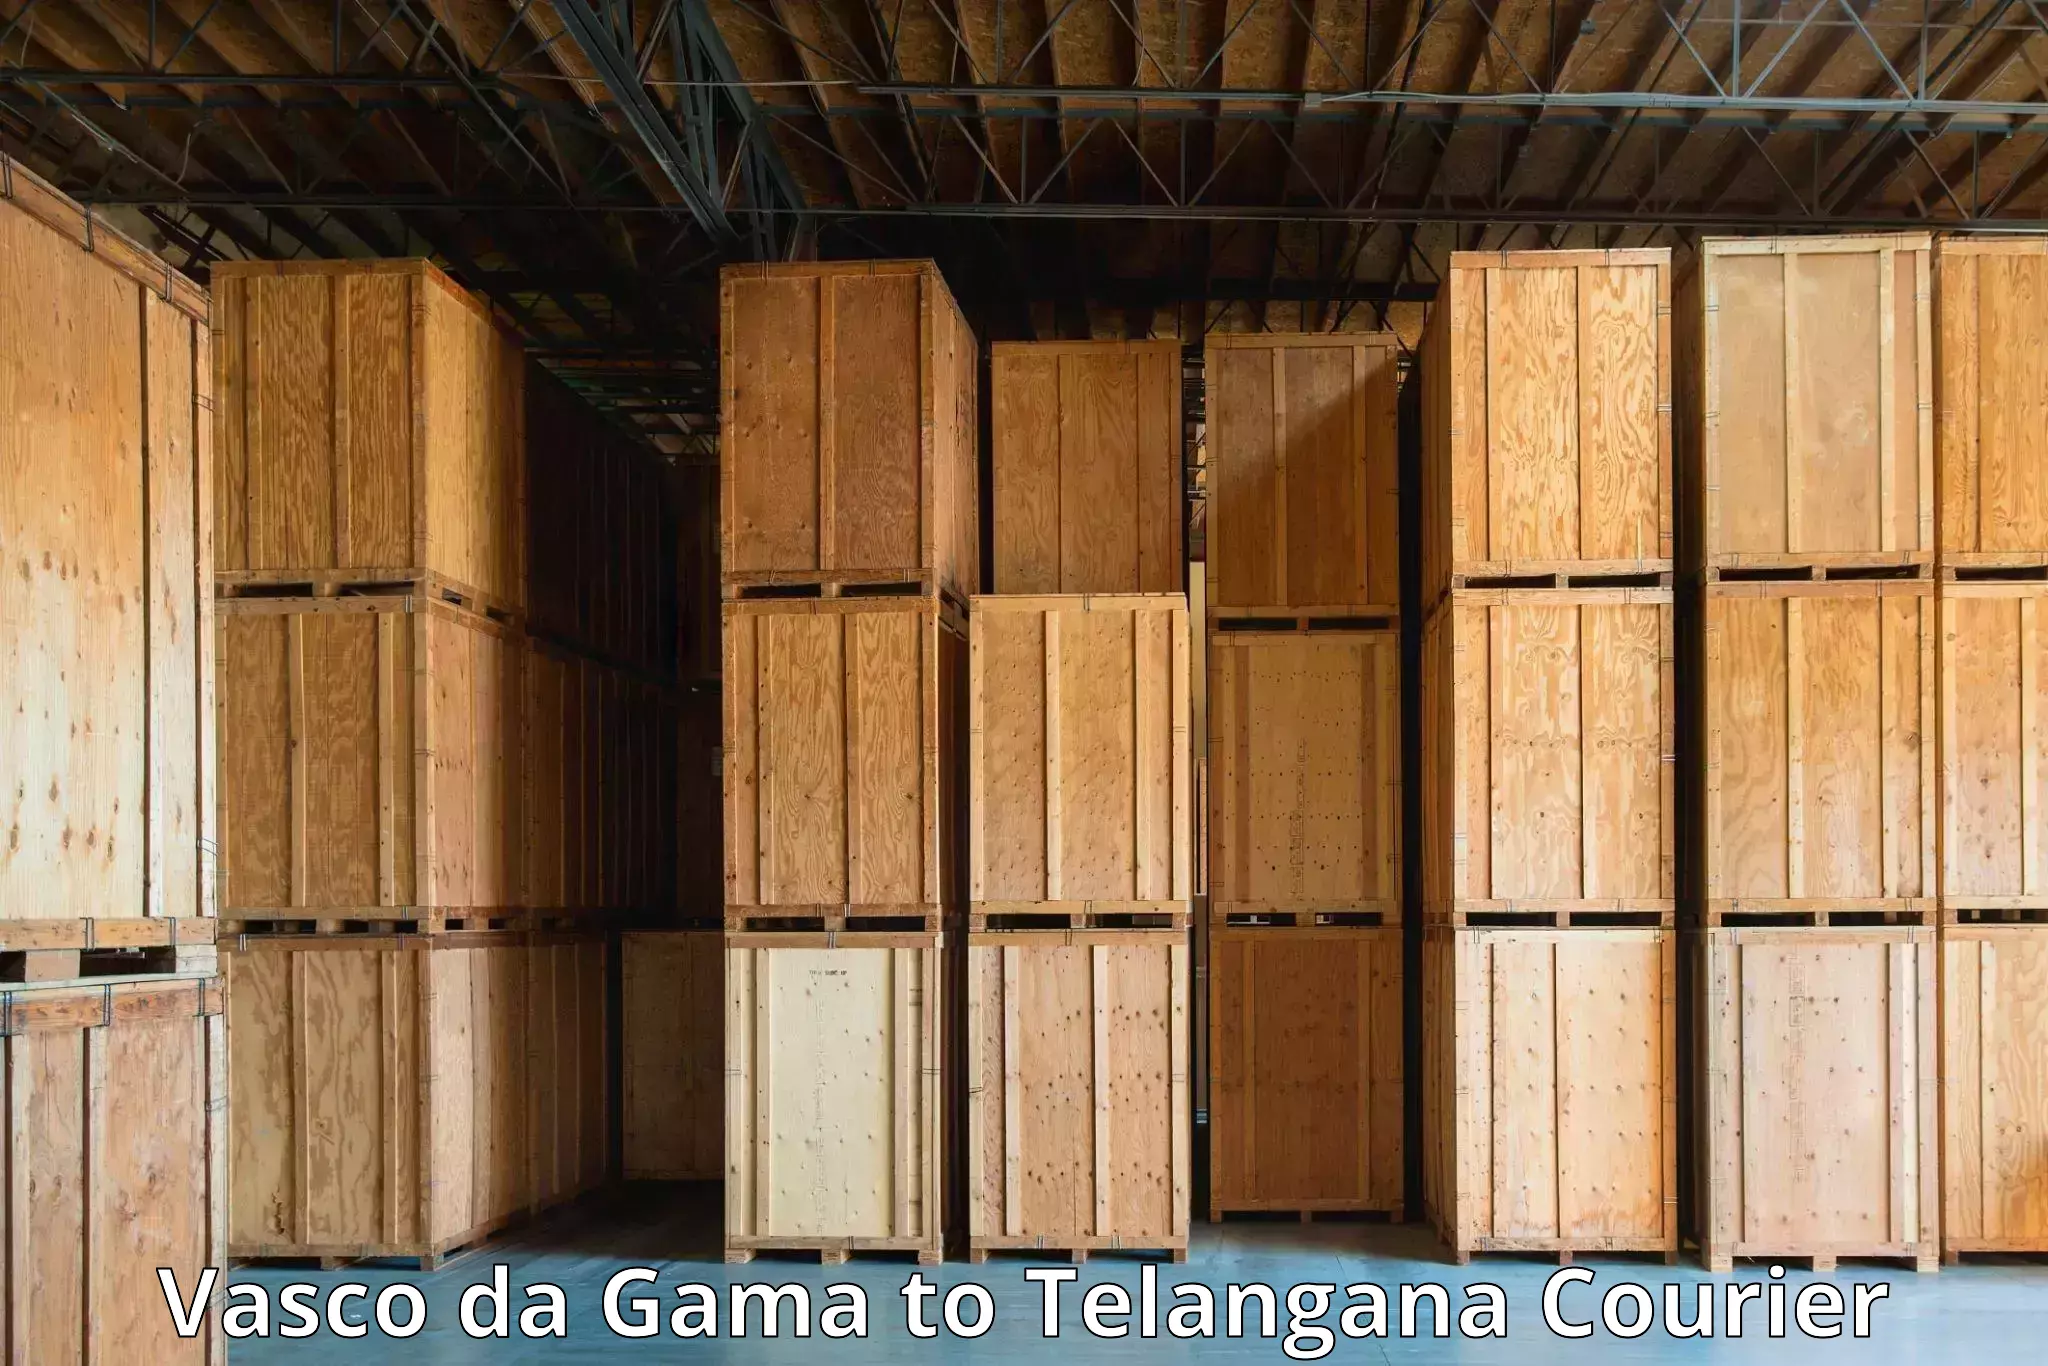 Reliable courier service Vasco da Gama to Tadvai